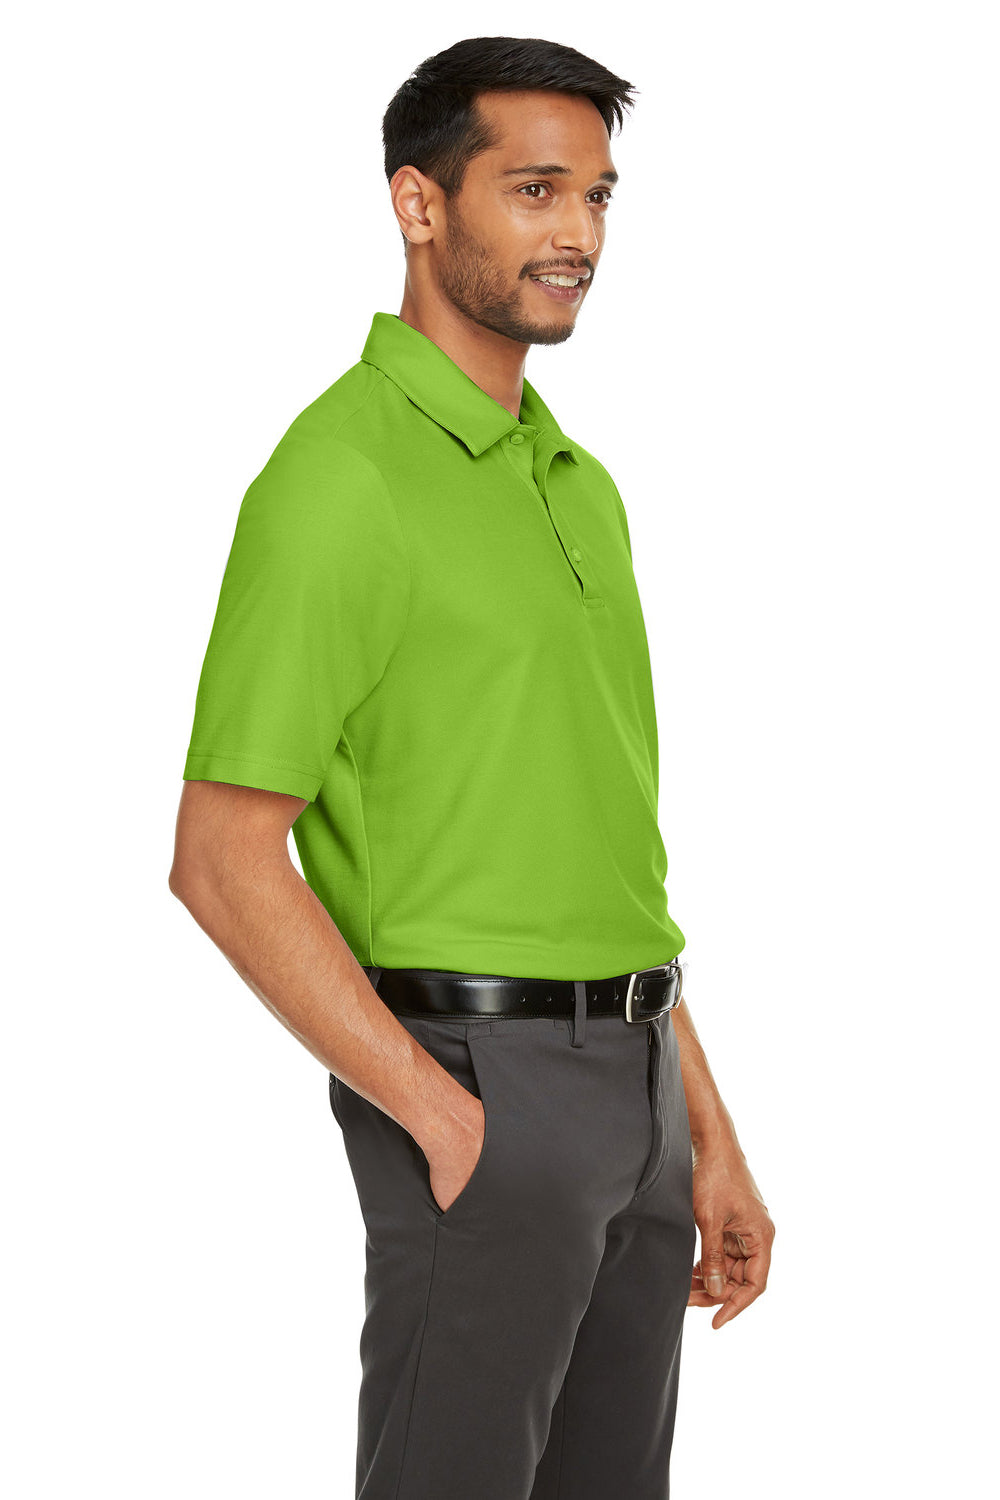 Core 365 CE112 Mens Fusion ChromaSoft Performance Moisture Wicking Short Sleeve Polo Shirt Acid Green 3Q